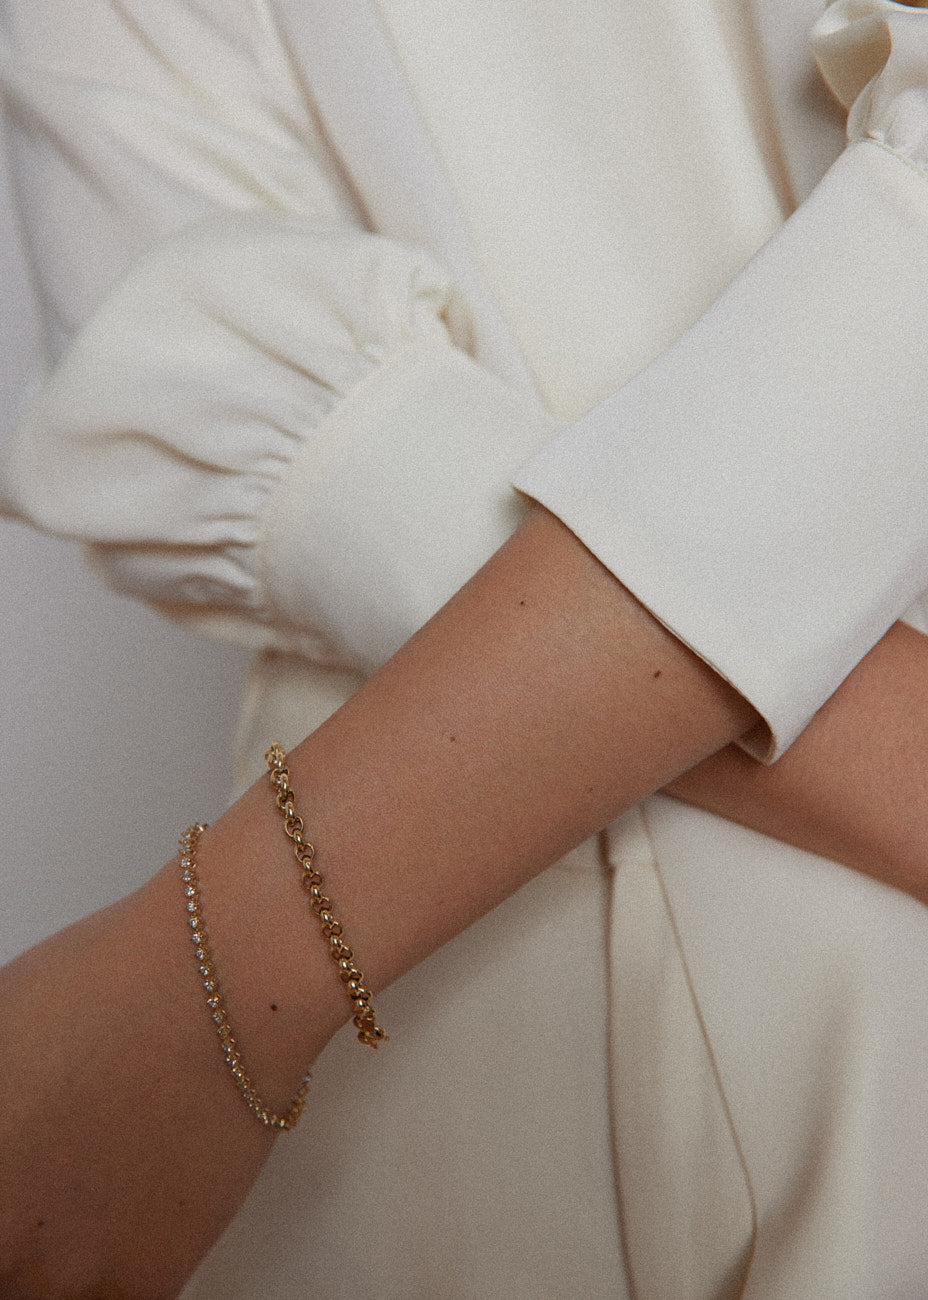 GEORG JENSEN SIGNATURE DIAMONDS Tennis Bracelet in 18kt gold and diamonds